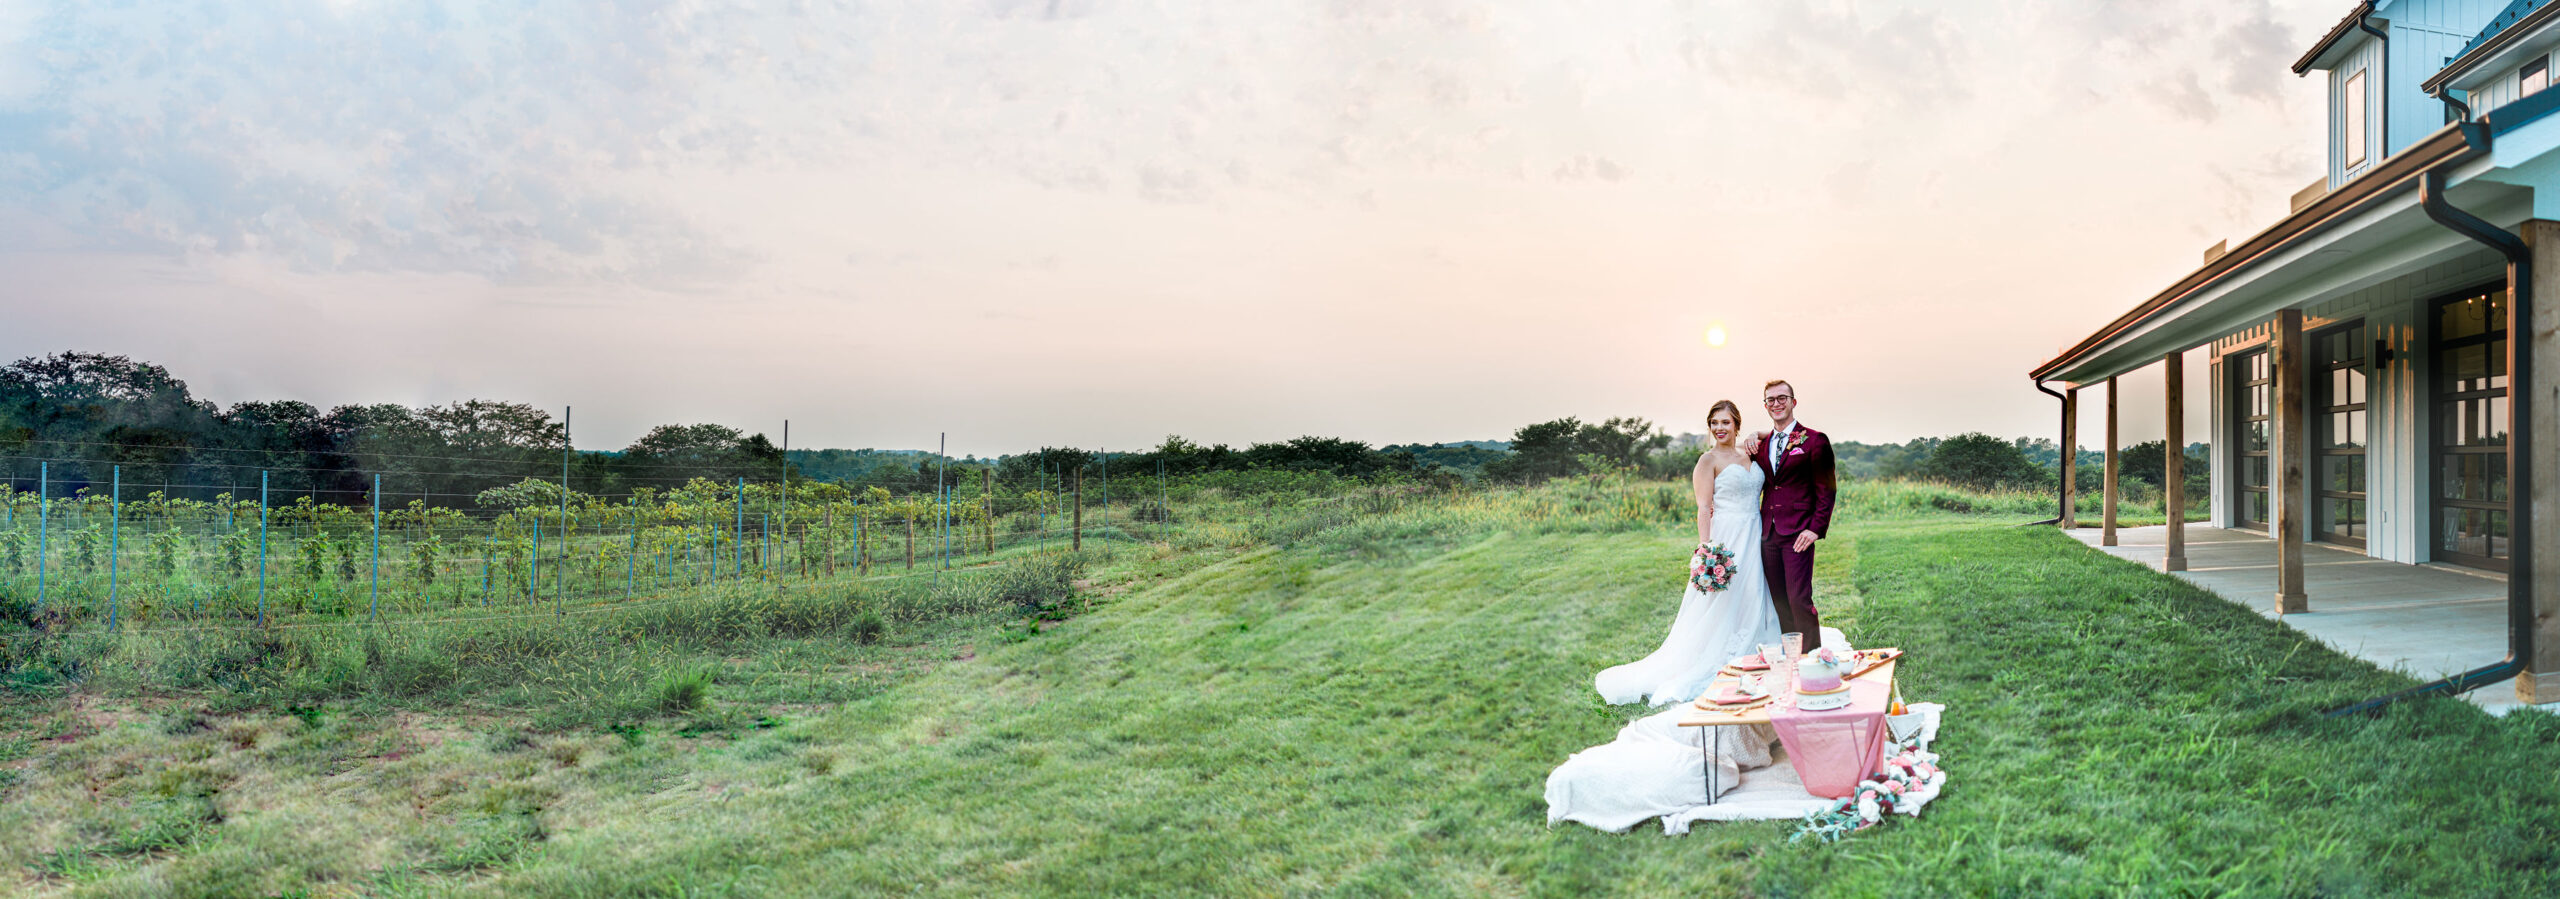 Presenting: The Chianti-Rose Wedding Styled Shoot